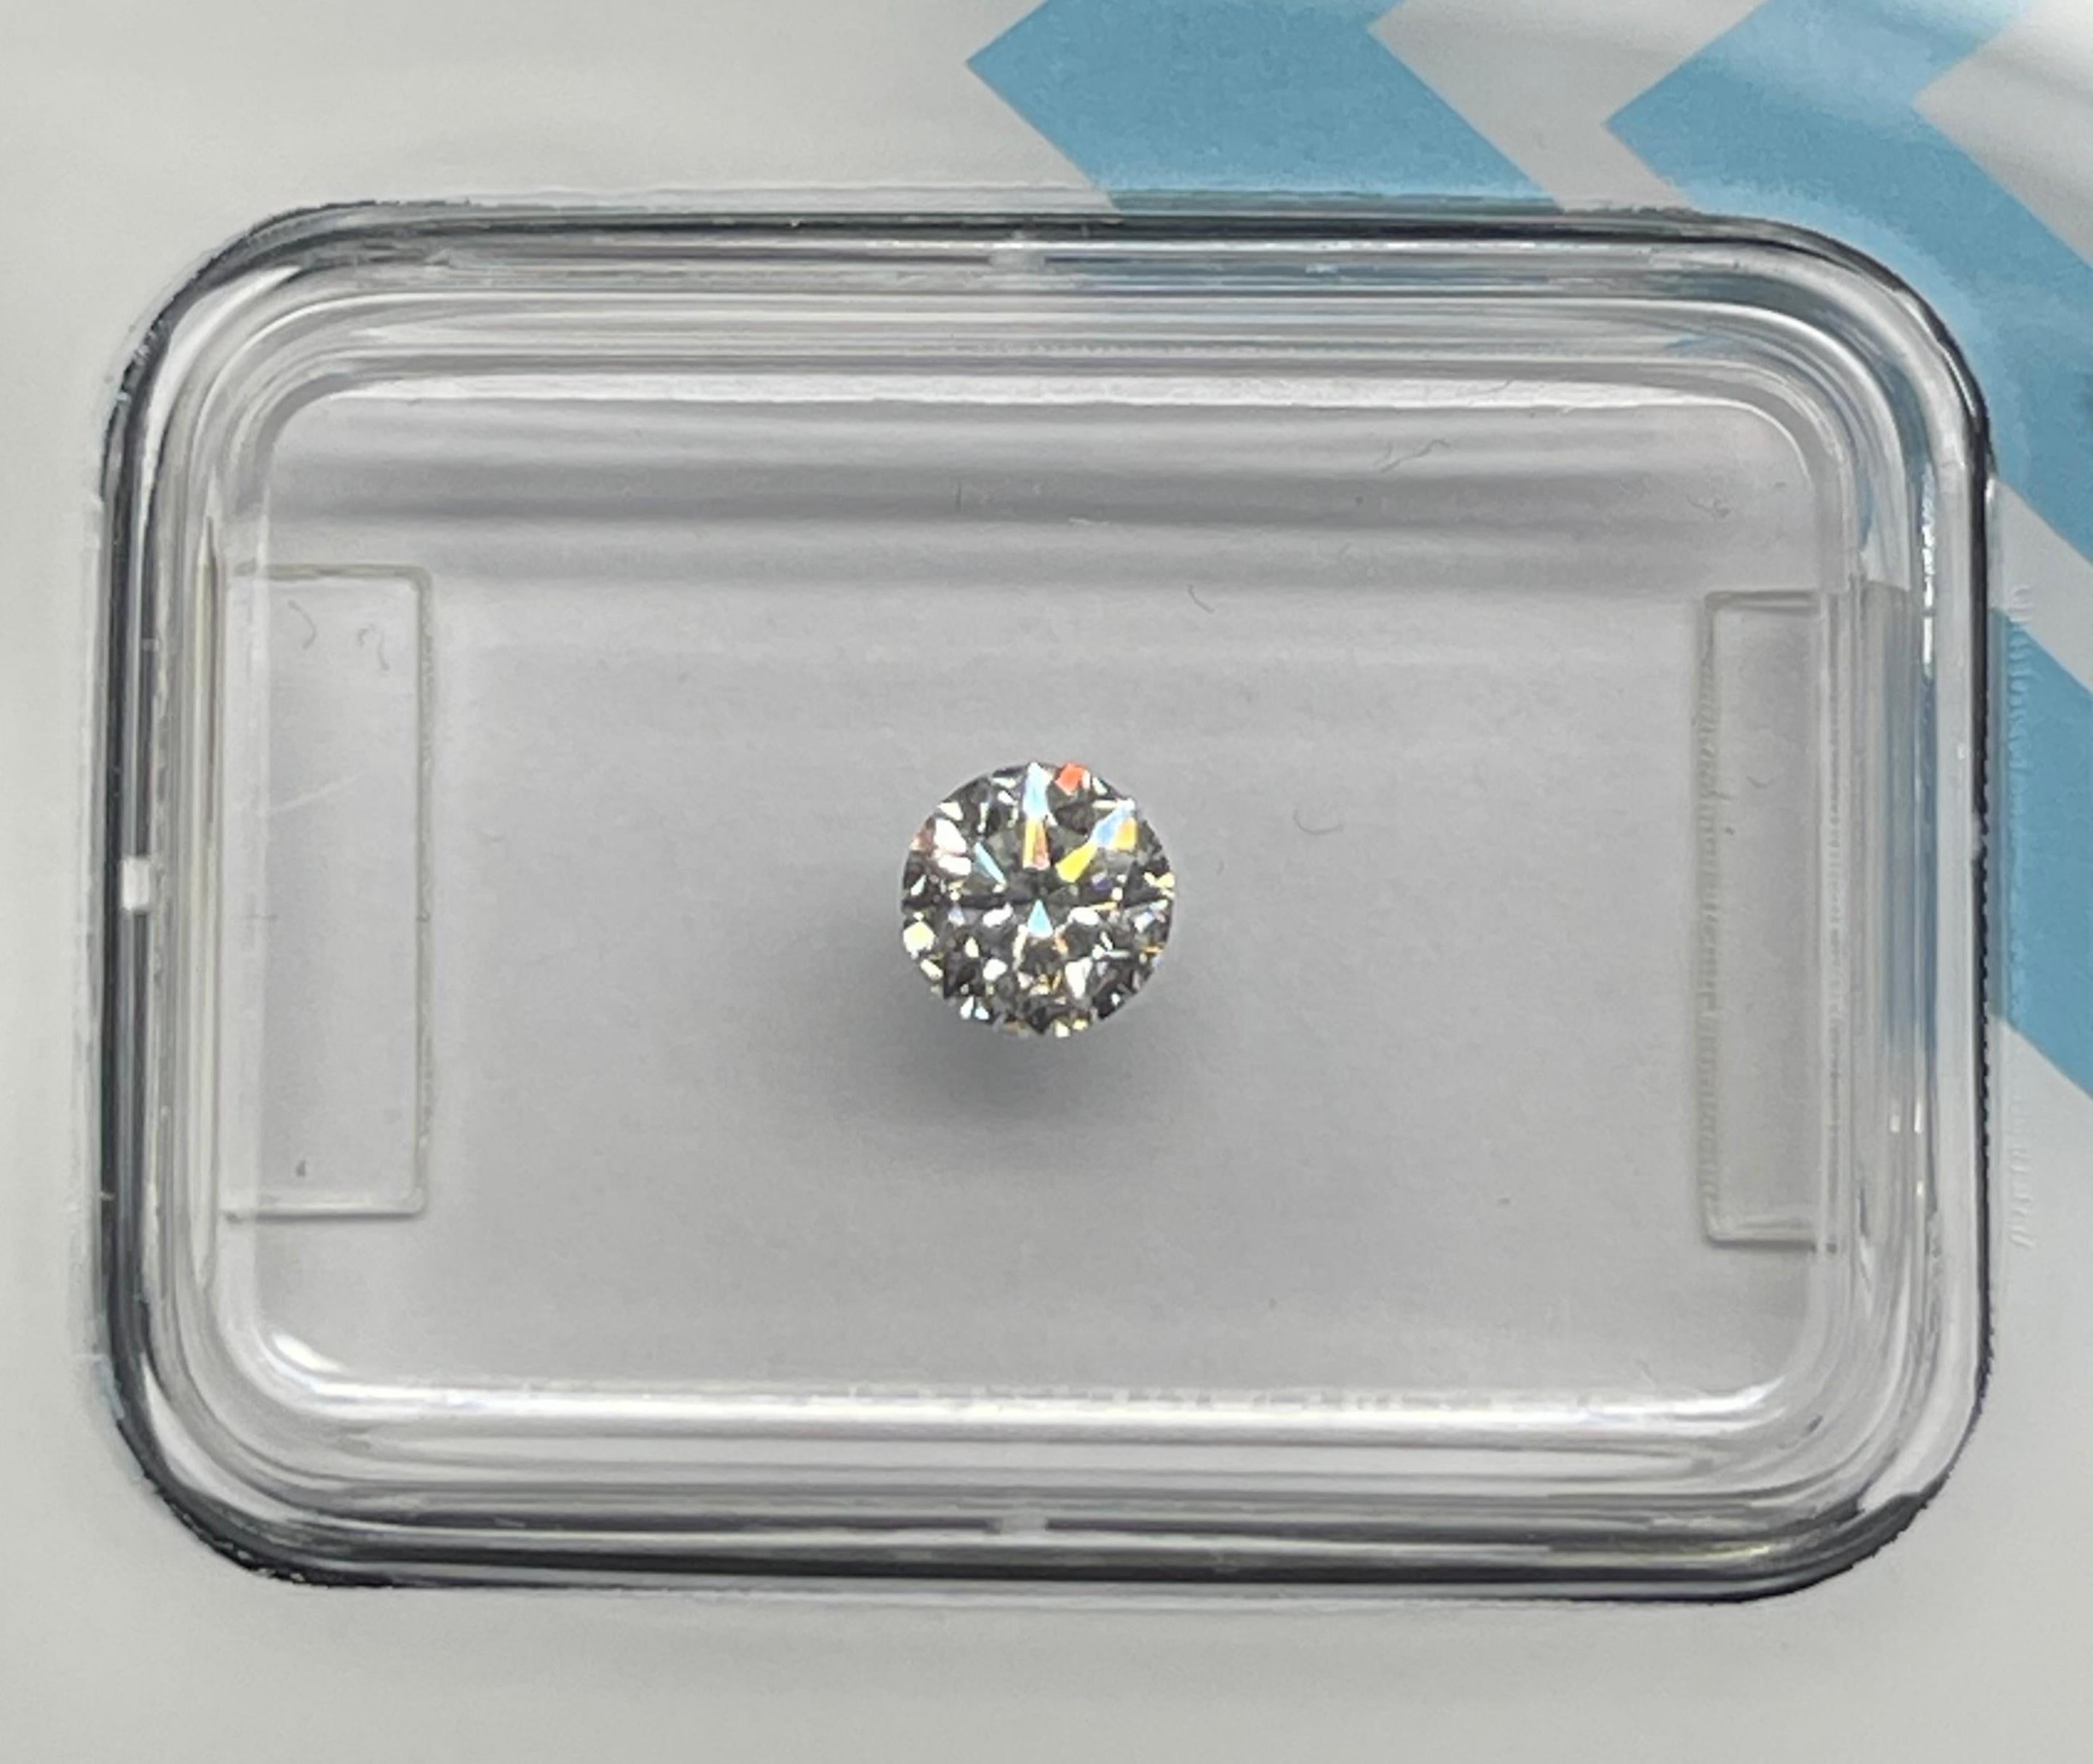 Natural Diamond graded by IGI.

Shape: Round Brilliant
Weight: 0.27 CT
Color: D
Clarity: SI2
Cut: Excellent
Polish: Excellent
Symmetry: Excellent
Fluorescence: None
Laser inscription : IGI 630434194